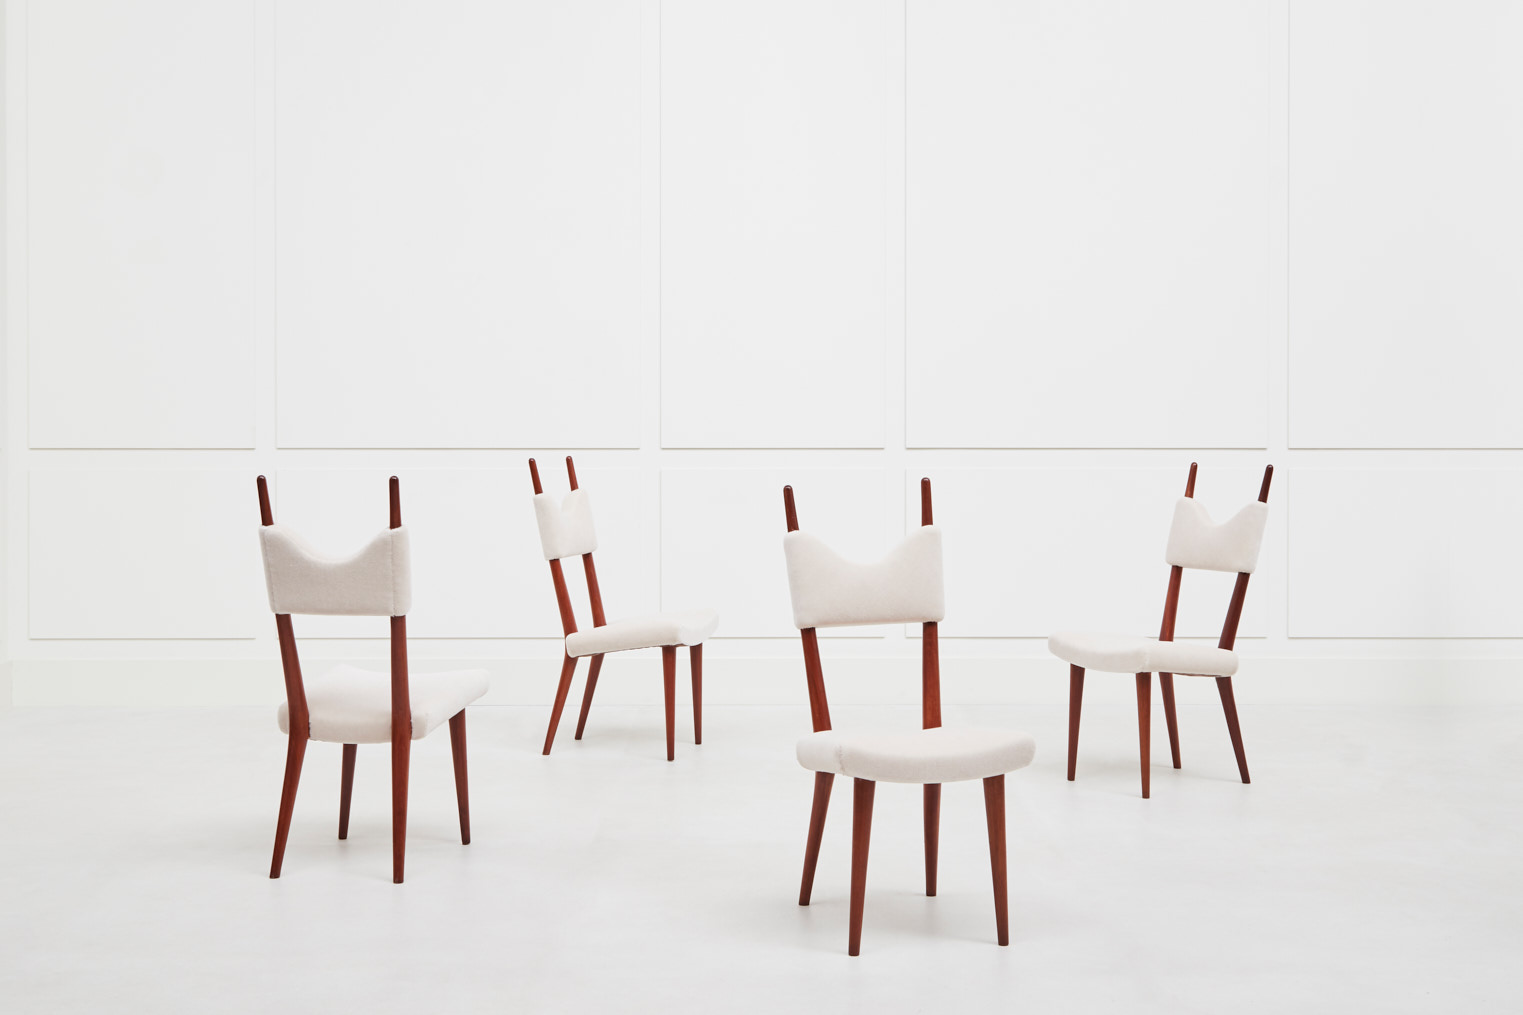 Jean Royère, pair of “Baltiques” chairs, vue 01